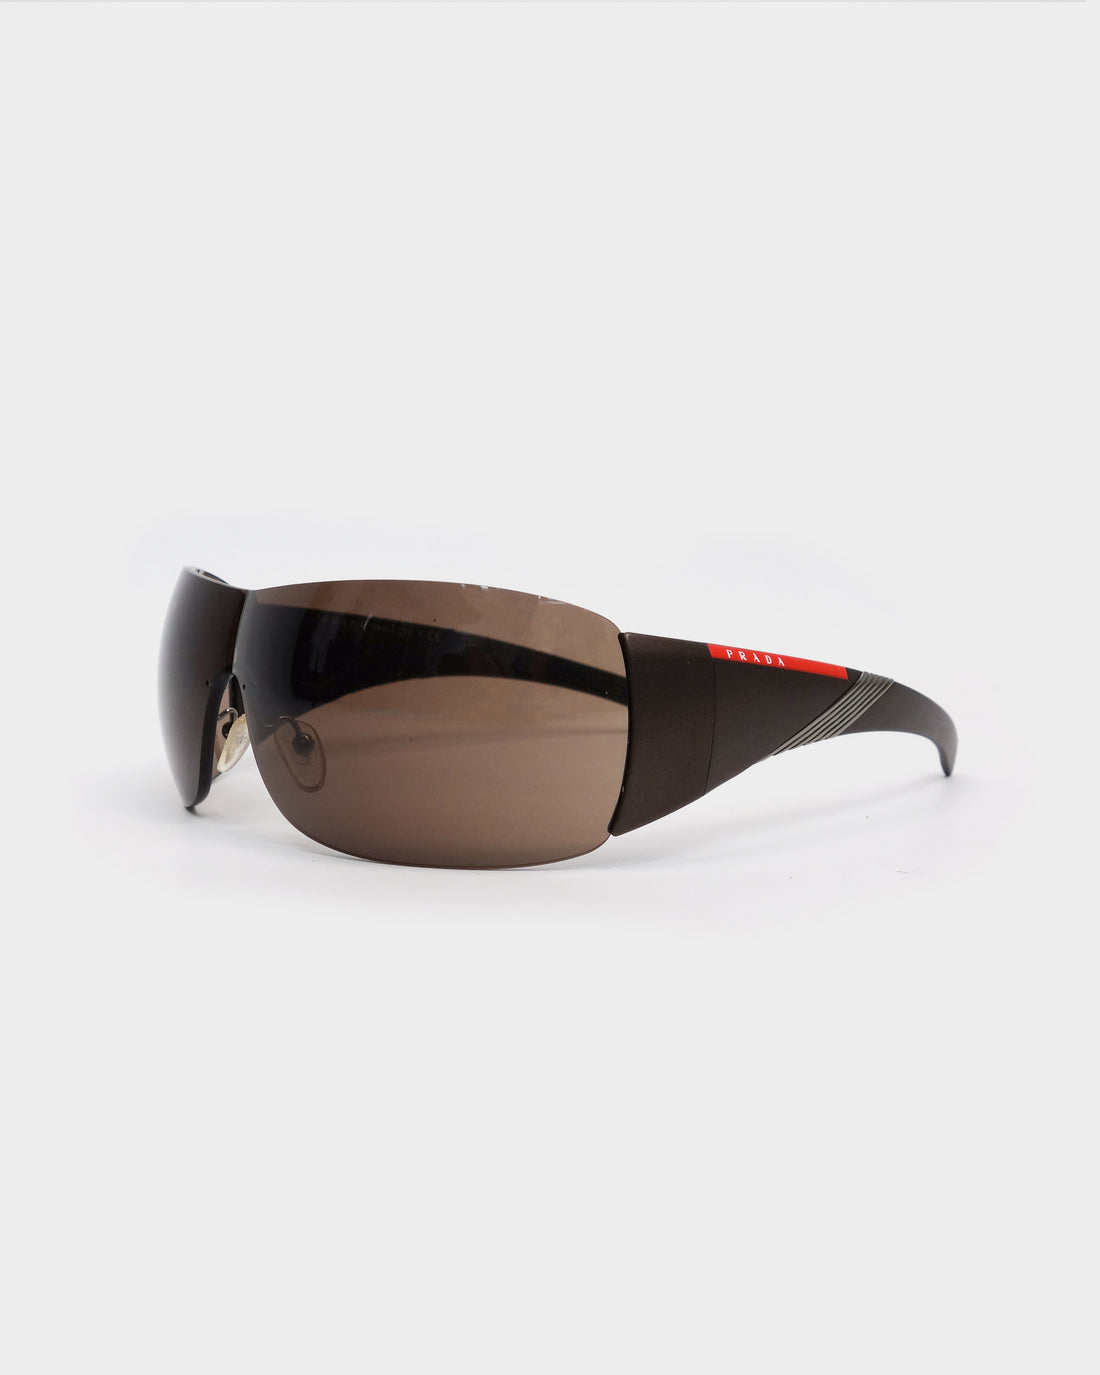 Prada brown Mask Sunglasses 2000's